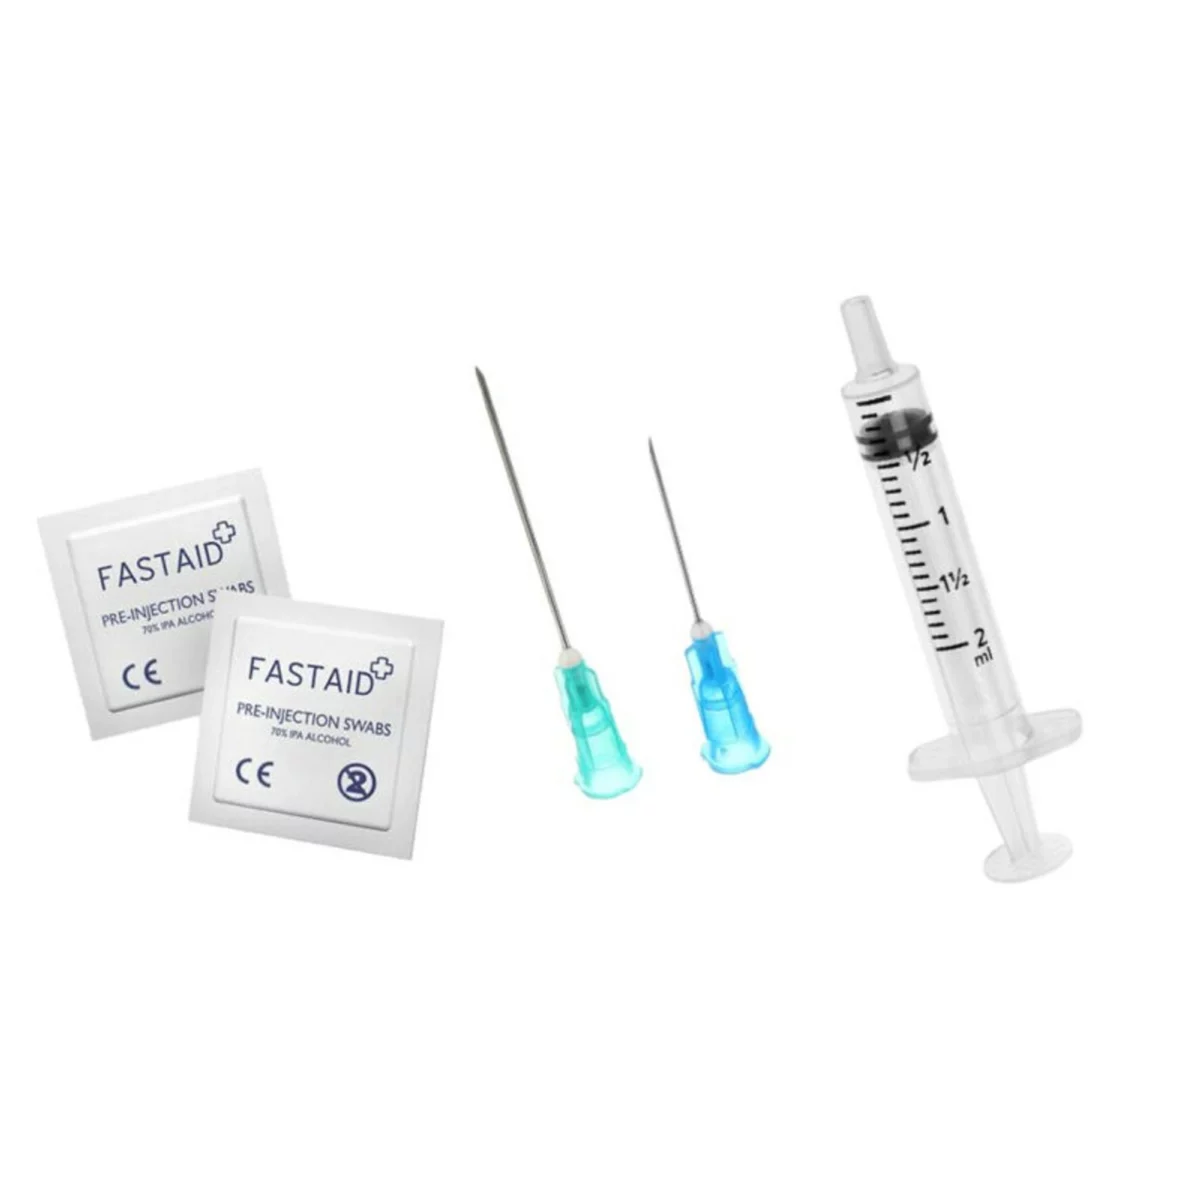 20 week injection cycle pack syringes blue needles swabs 45990 800x800 1 08420 1